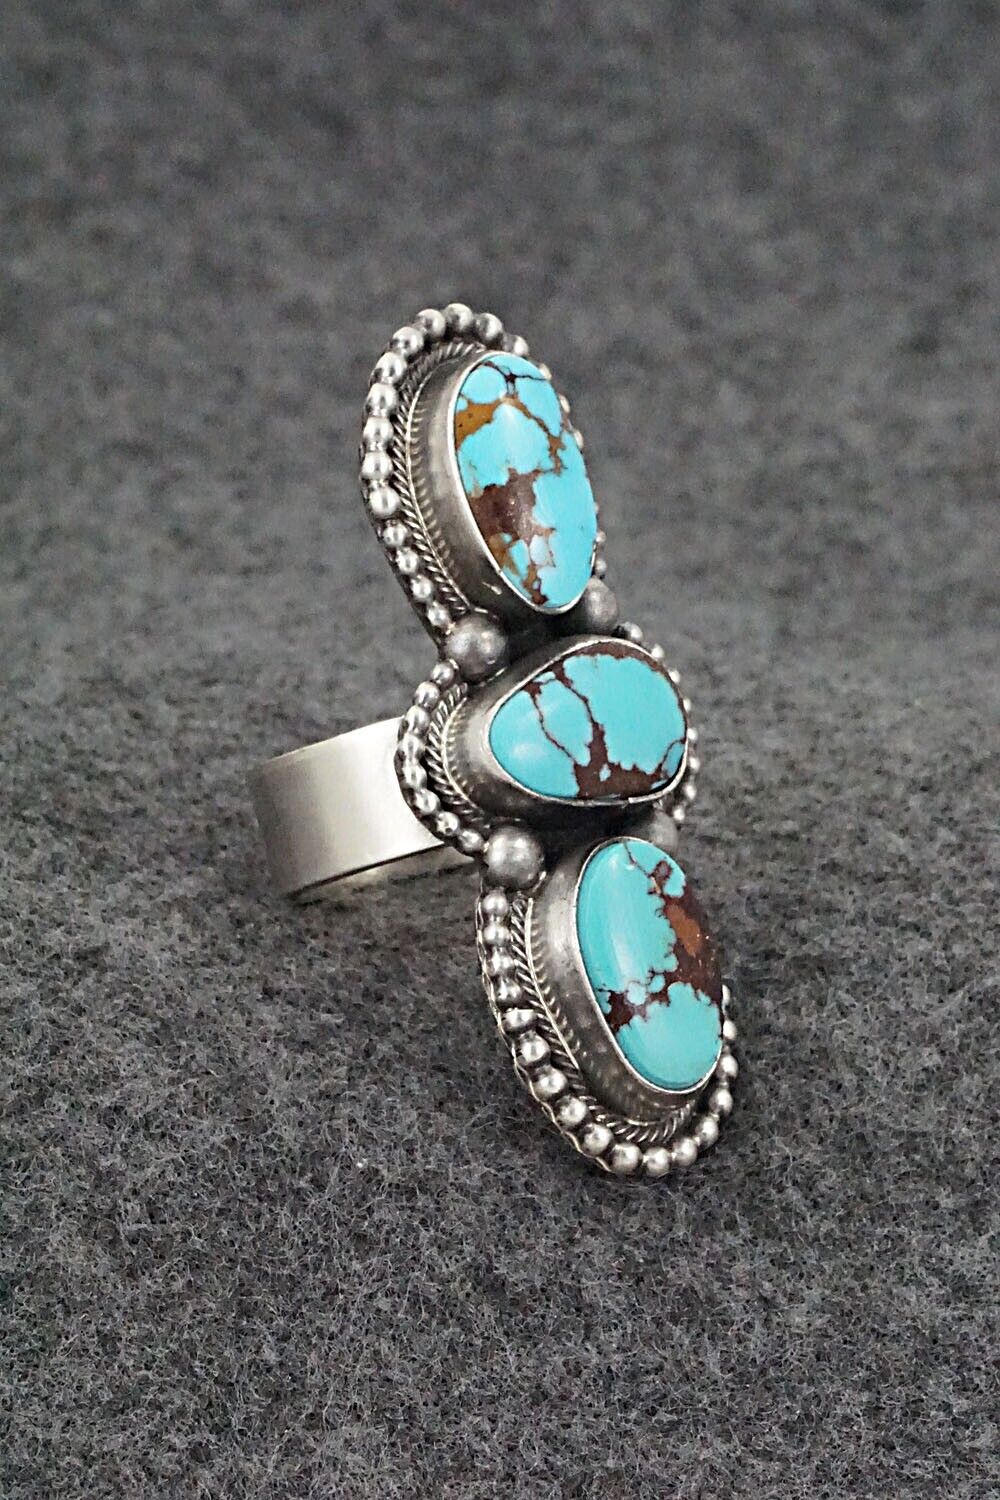 Turquoise & Sterling Silver Ring - Darrin Livingston - Size 9 Adj.